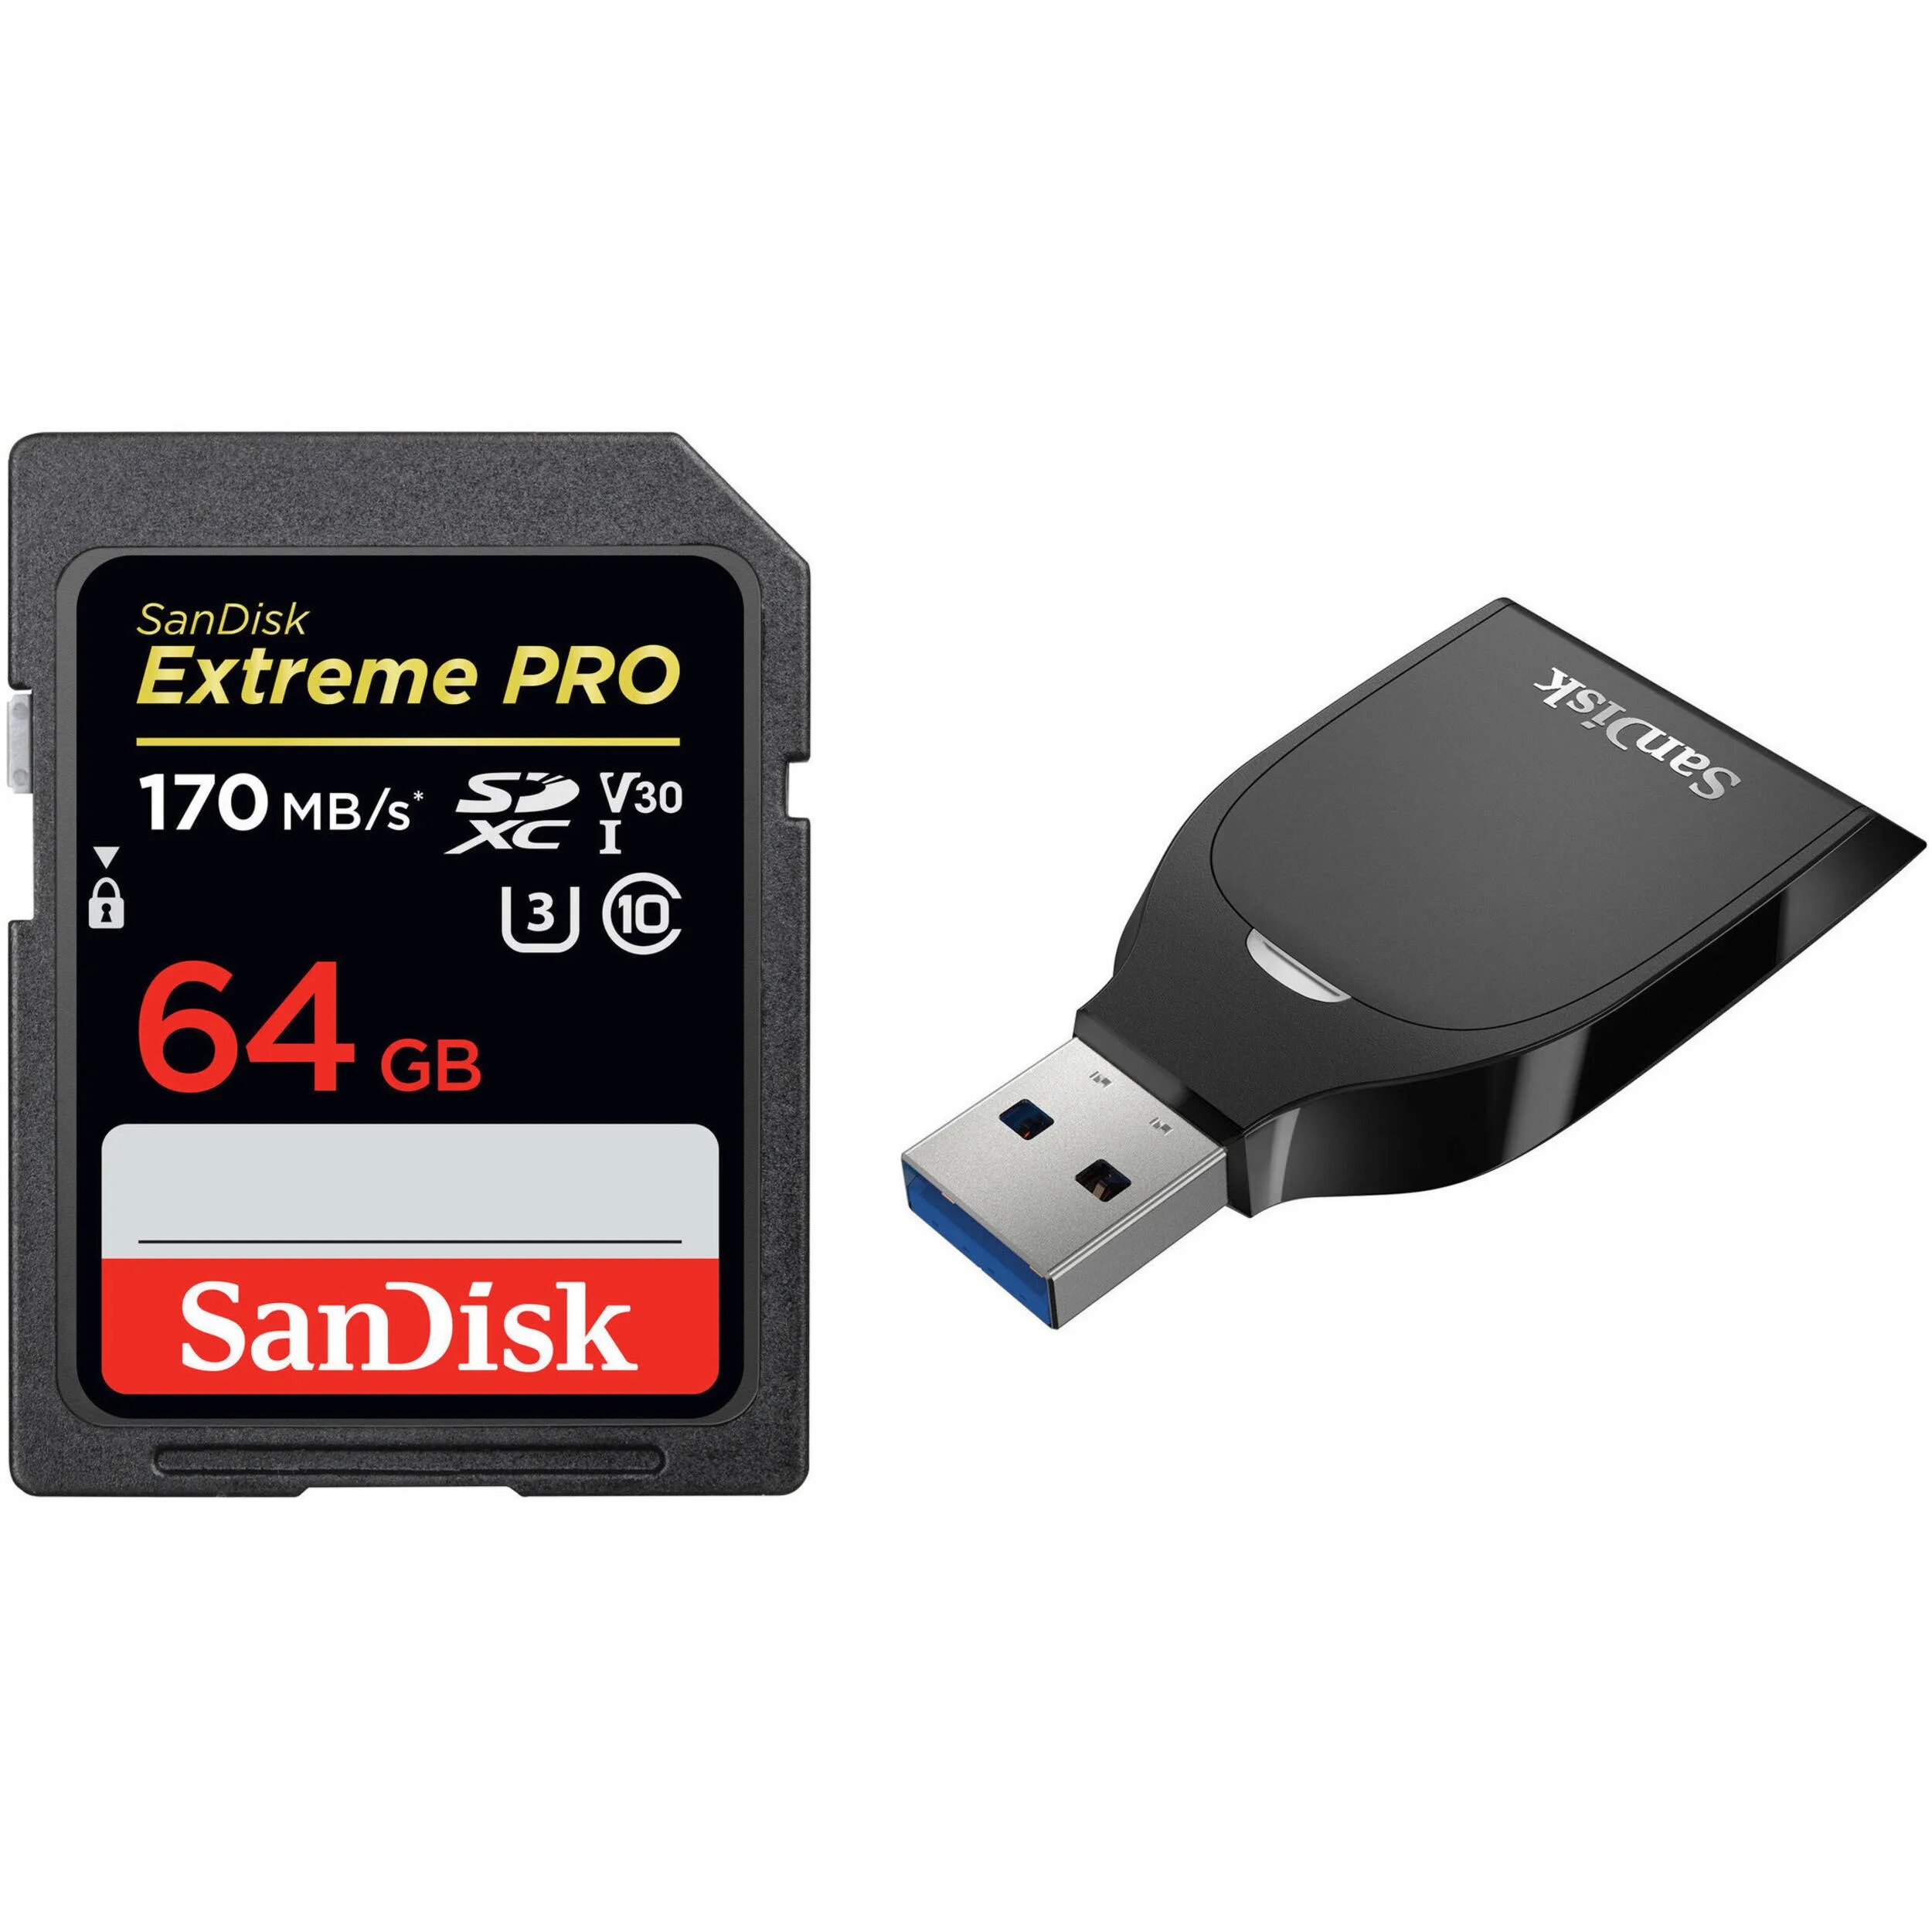 Память sandisk. SANDISK extreme 64gb. SANDISK extreme Pro UHS-I SDXC Memory Card 170mb/s -SDSDXXY-128g-gn4in 128gb Black. SANDISK 64gb 170mb/s. SANDISK extreme Pro 64gb 170mb/s.